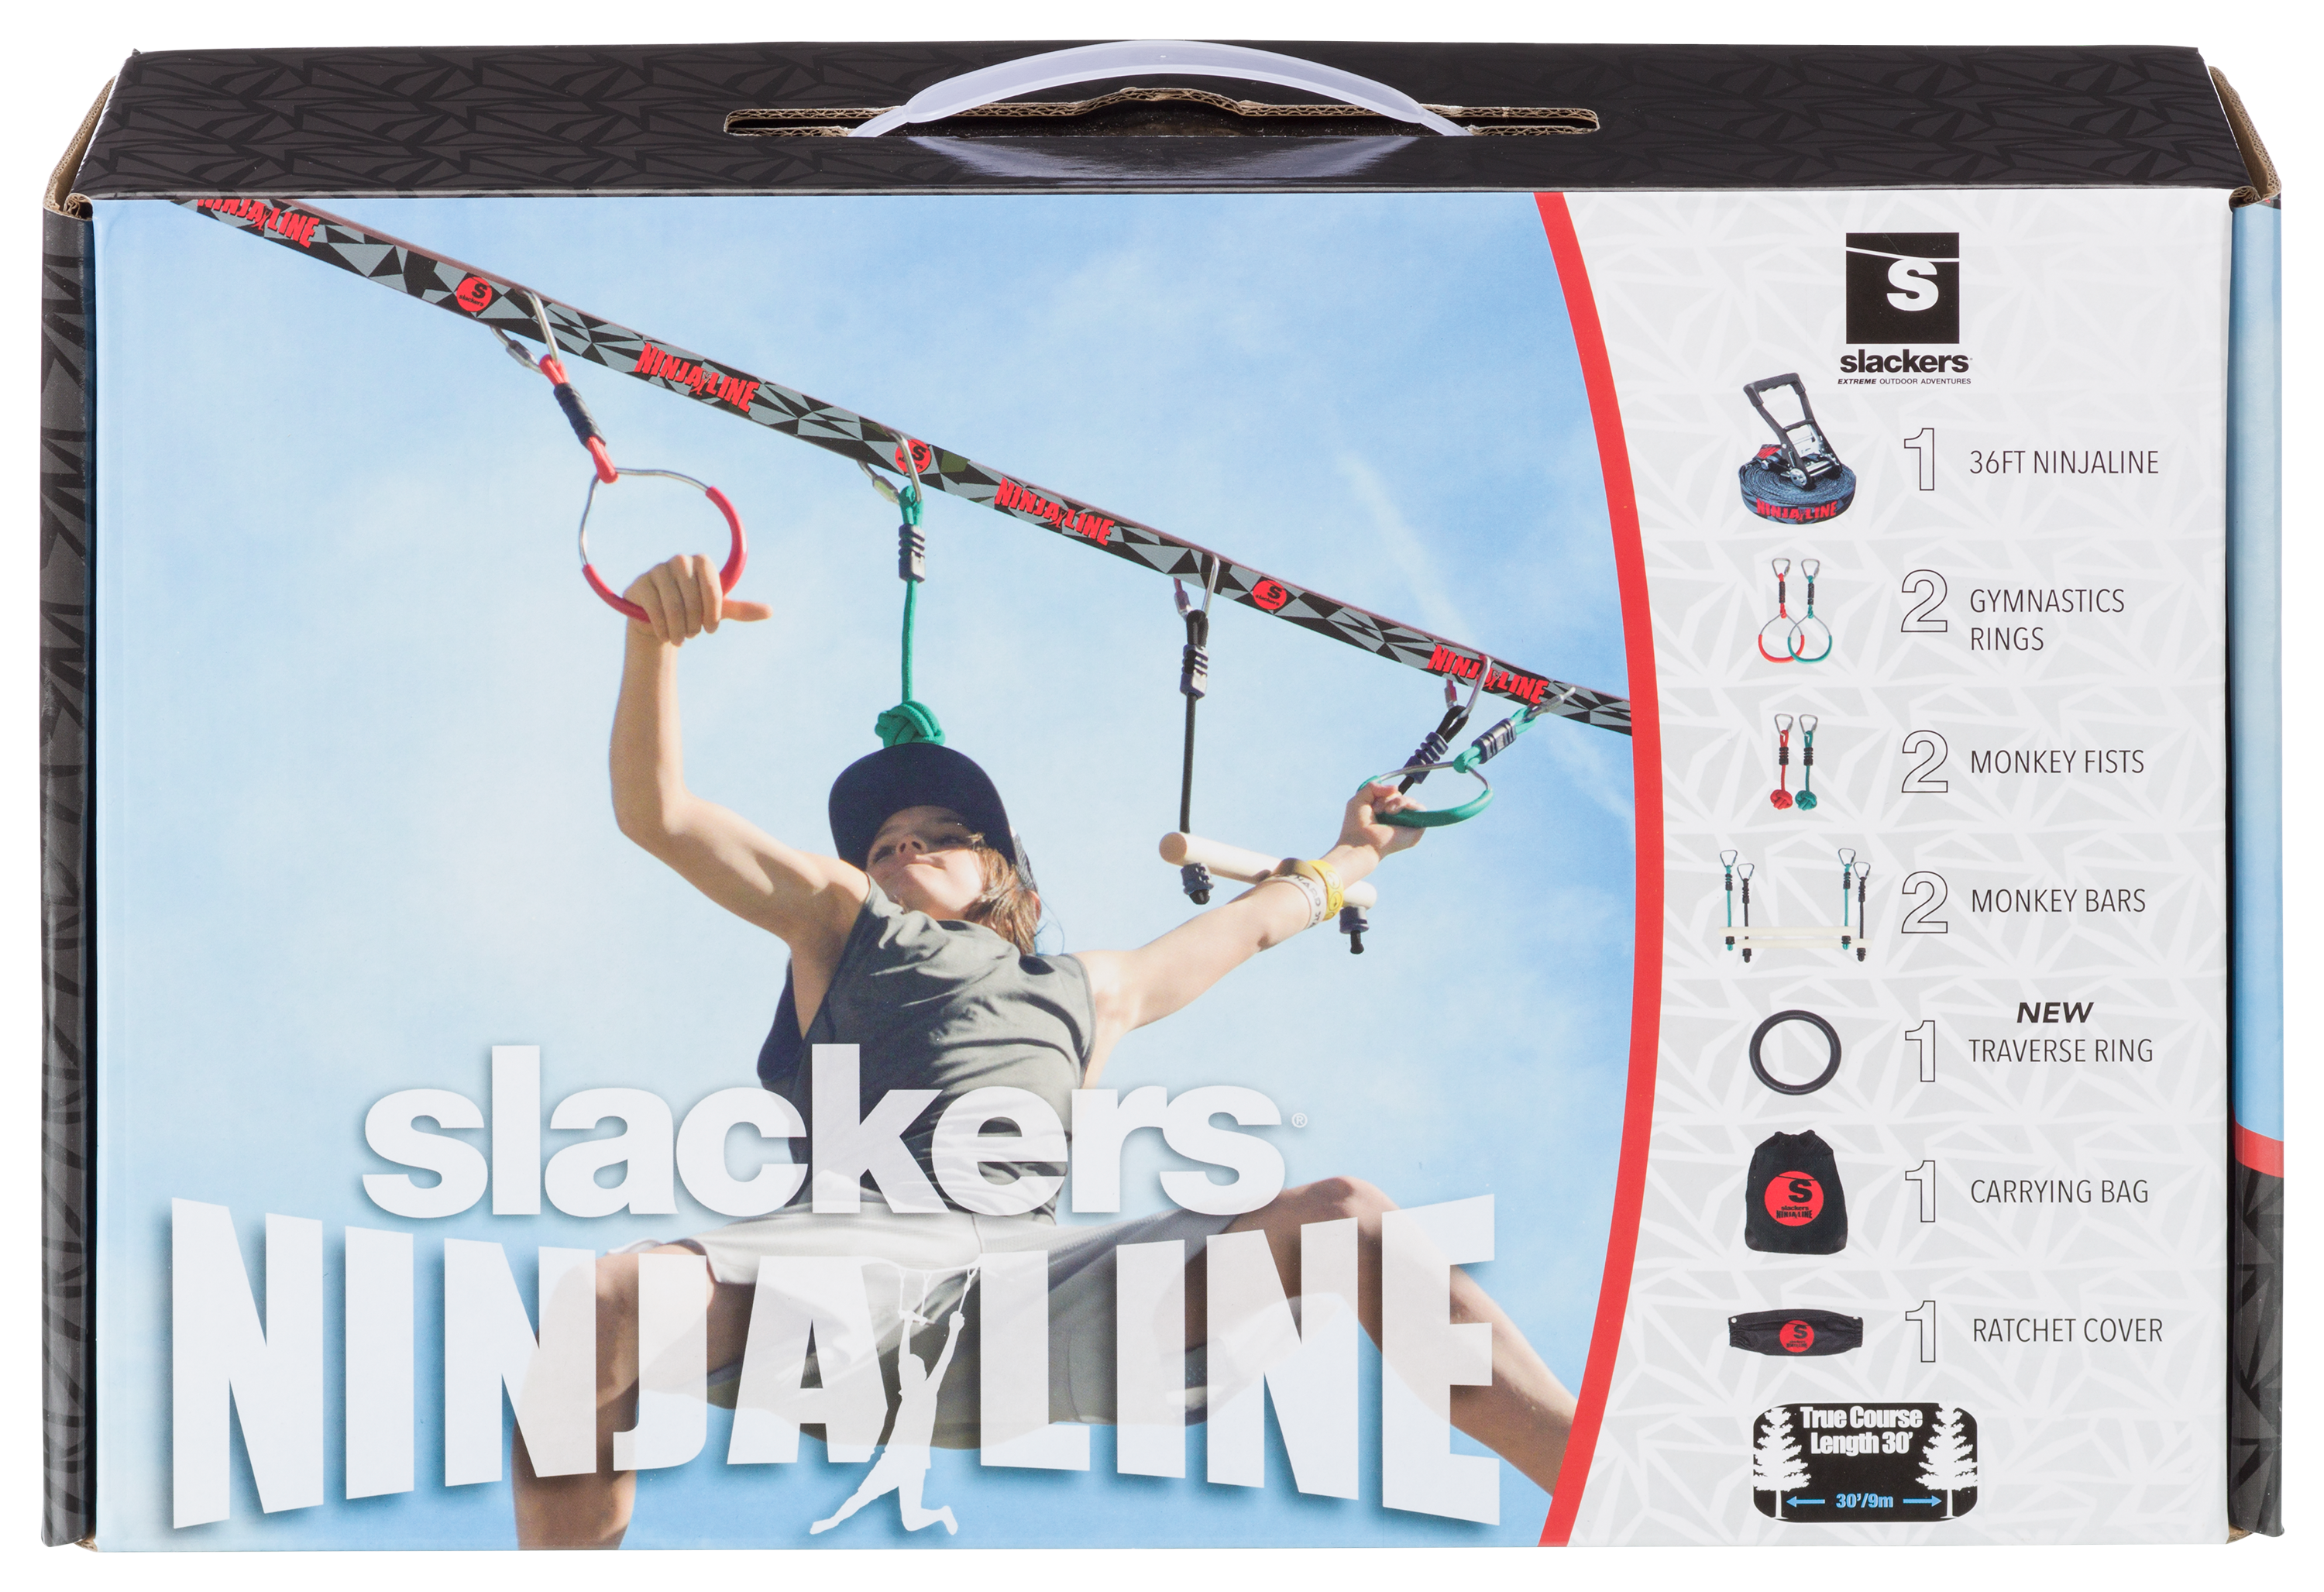 B4 Adventure Slackers Ninjaline 36 Backyard Outdoor Hanging Obstacle Intro Kit